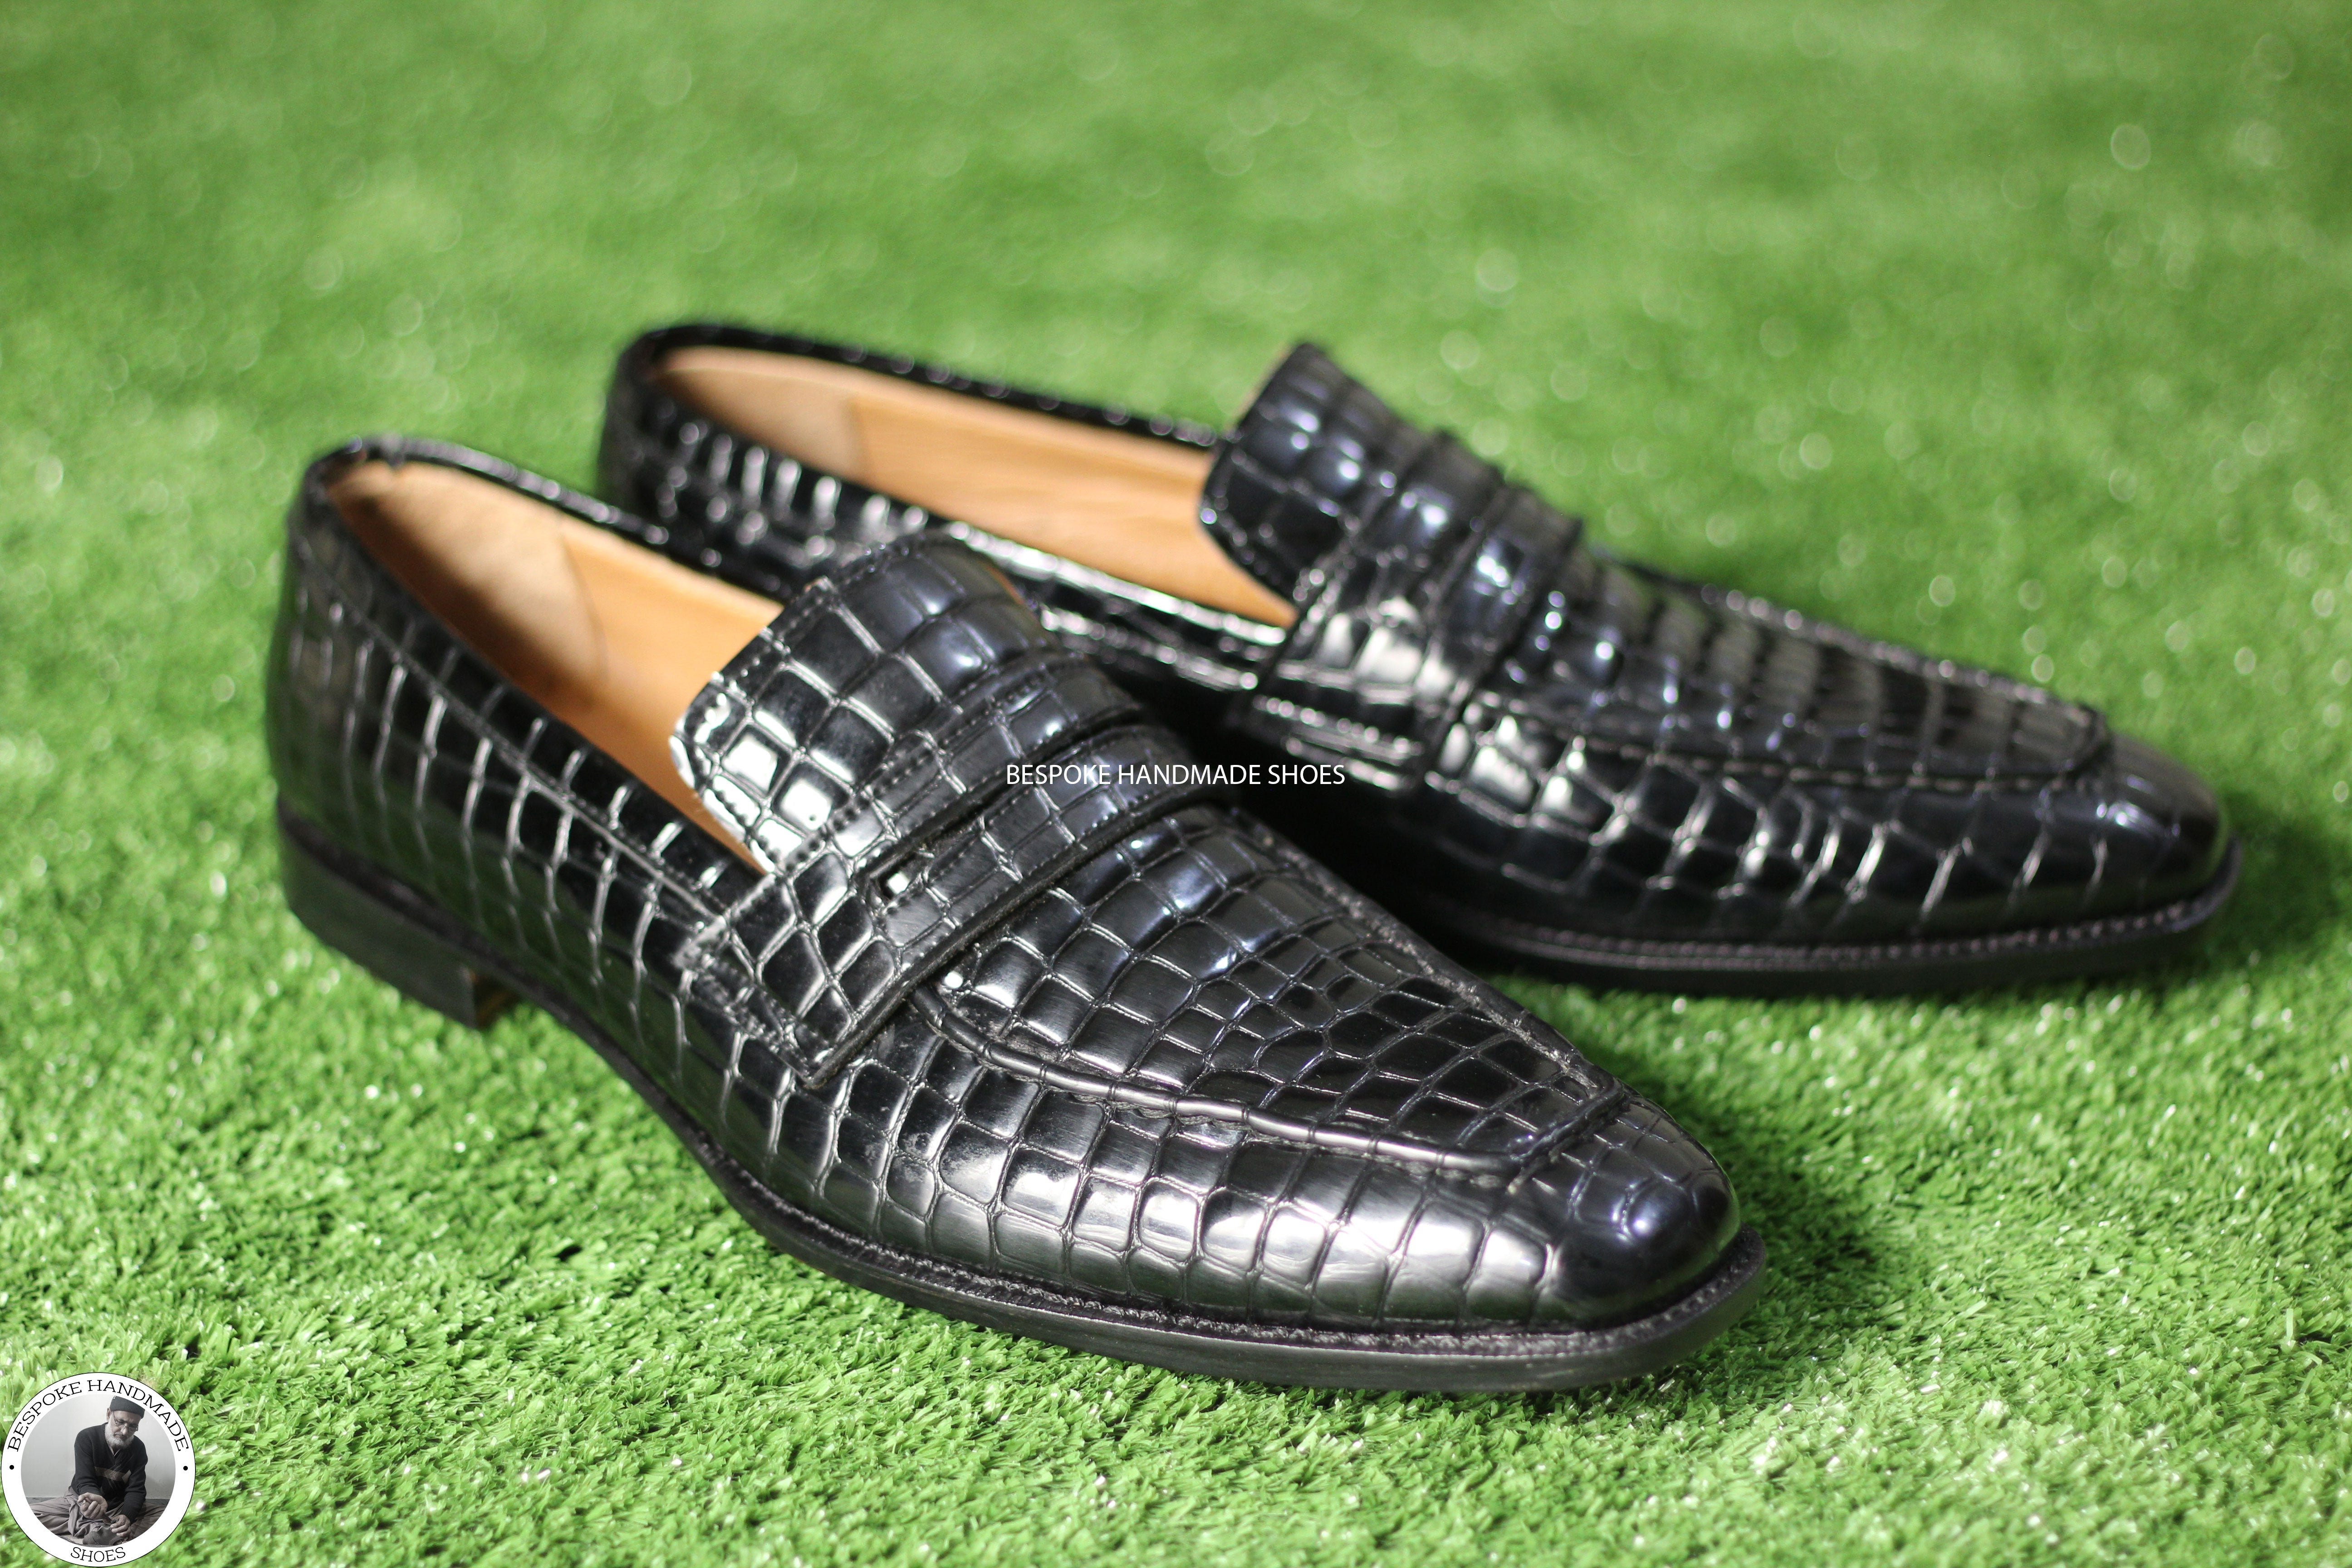 Custom Made Men's Black Animal Print Leather Loafer Moccasin Slip on Dress Shoes